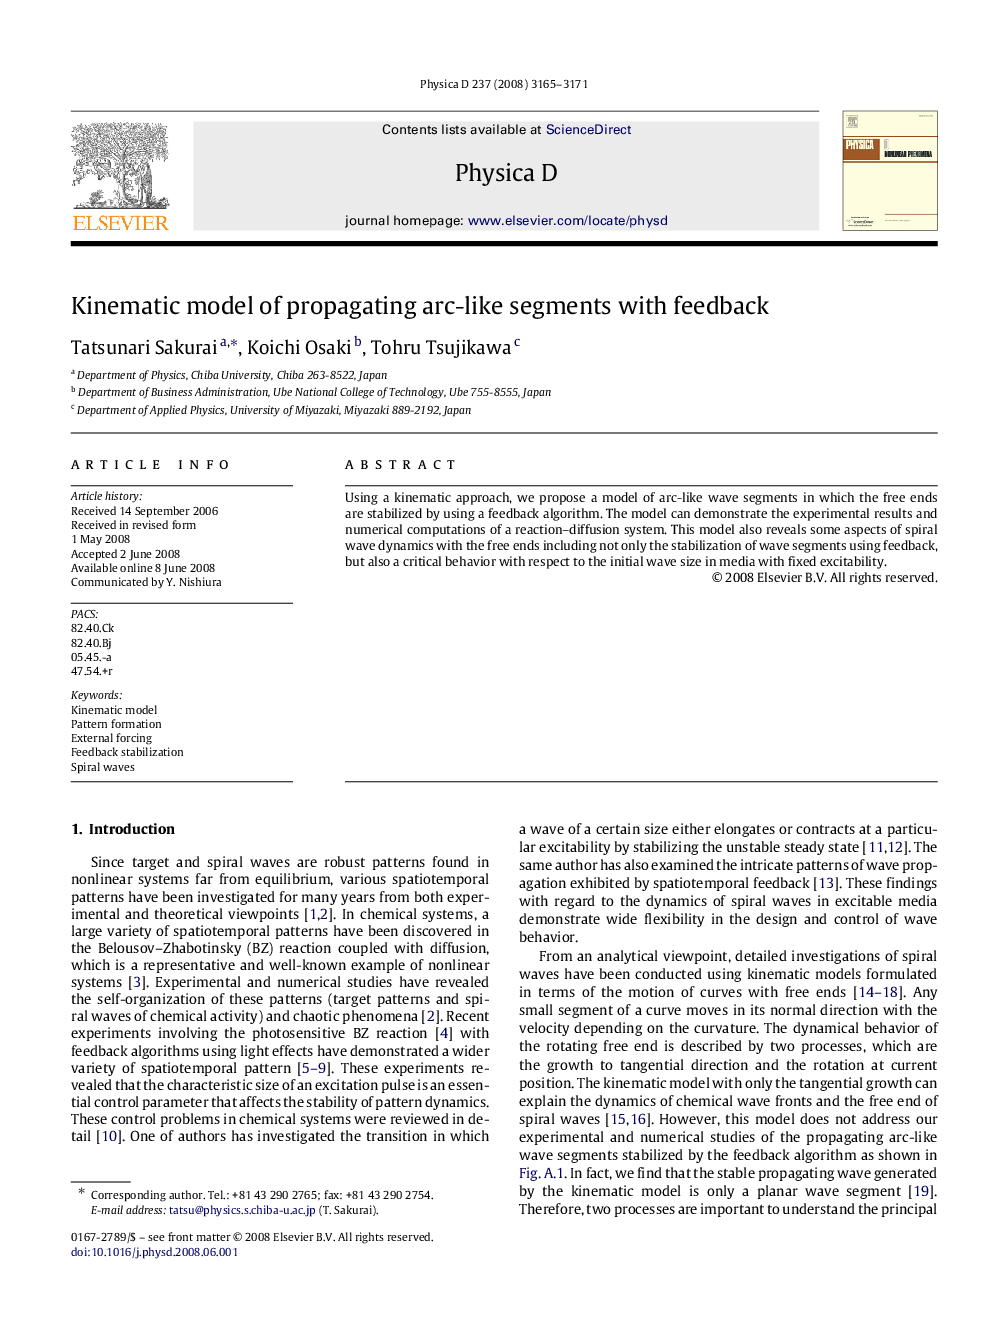 Kinematic model of propagating arc-like segments with feedback